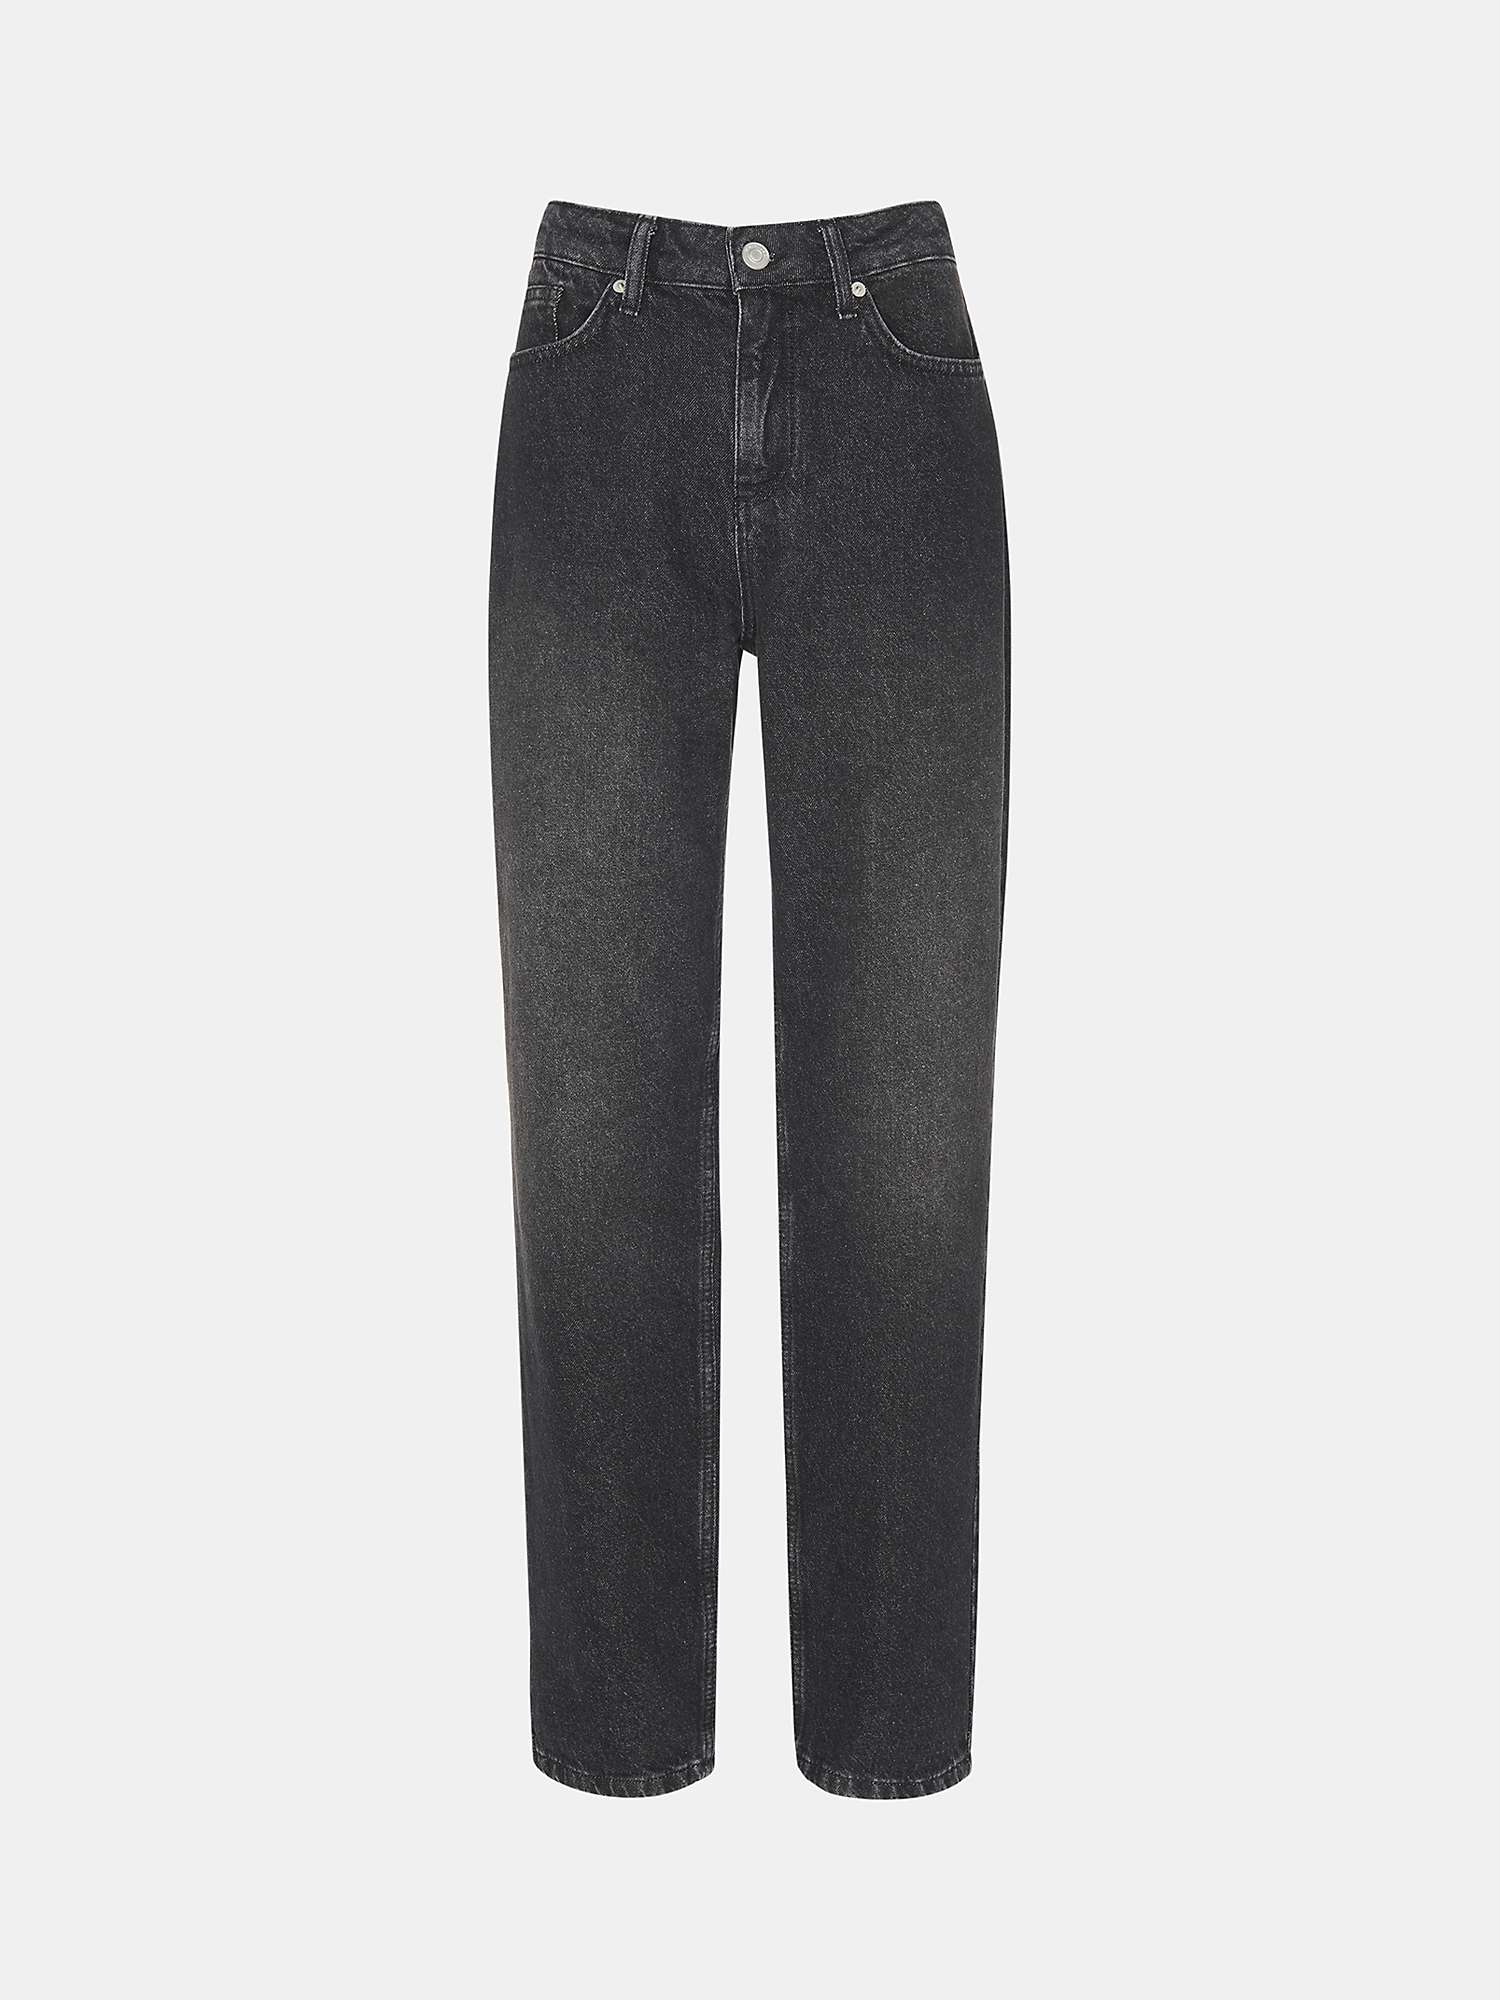 Buy Whistles Straight Leg Full Length Jeans, Washed Black Online at johnlewis.com